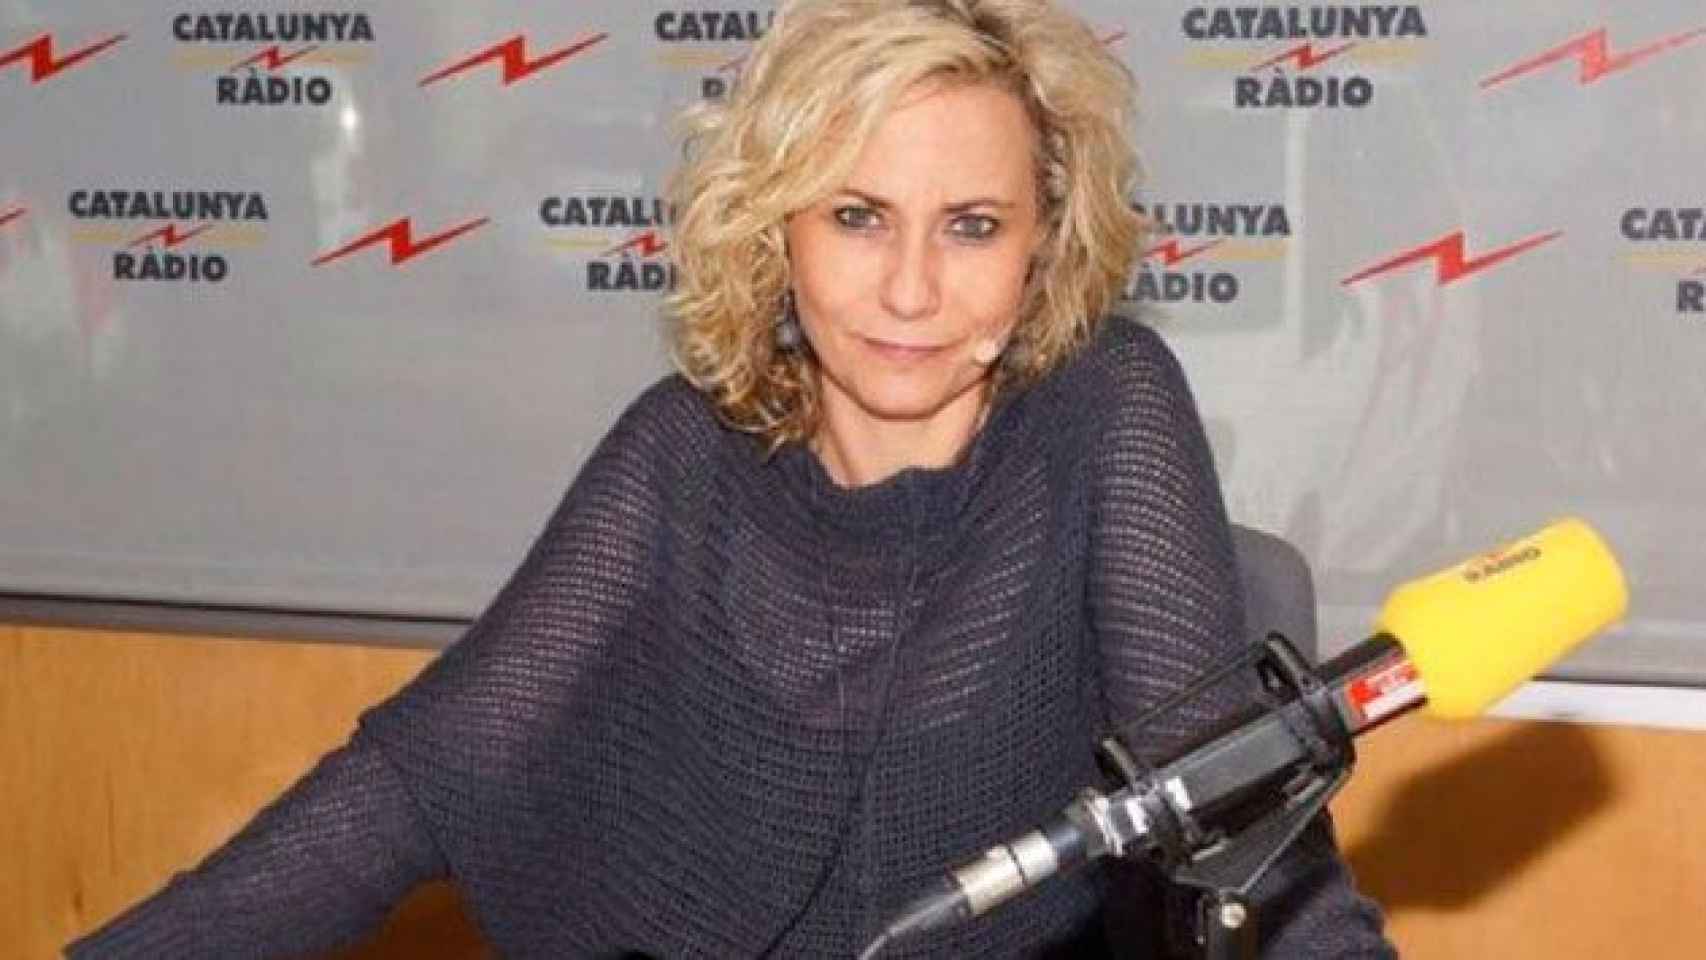 Mònica Terribas, periodista de Catalunya Ràdio, en una imagen de archivo / CG